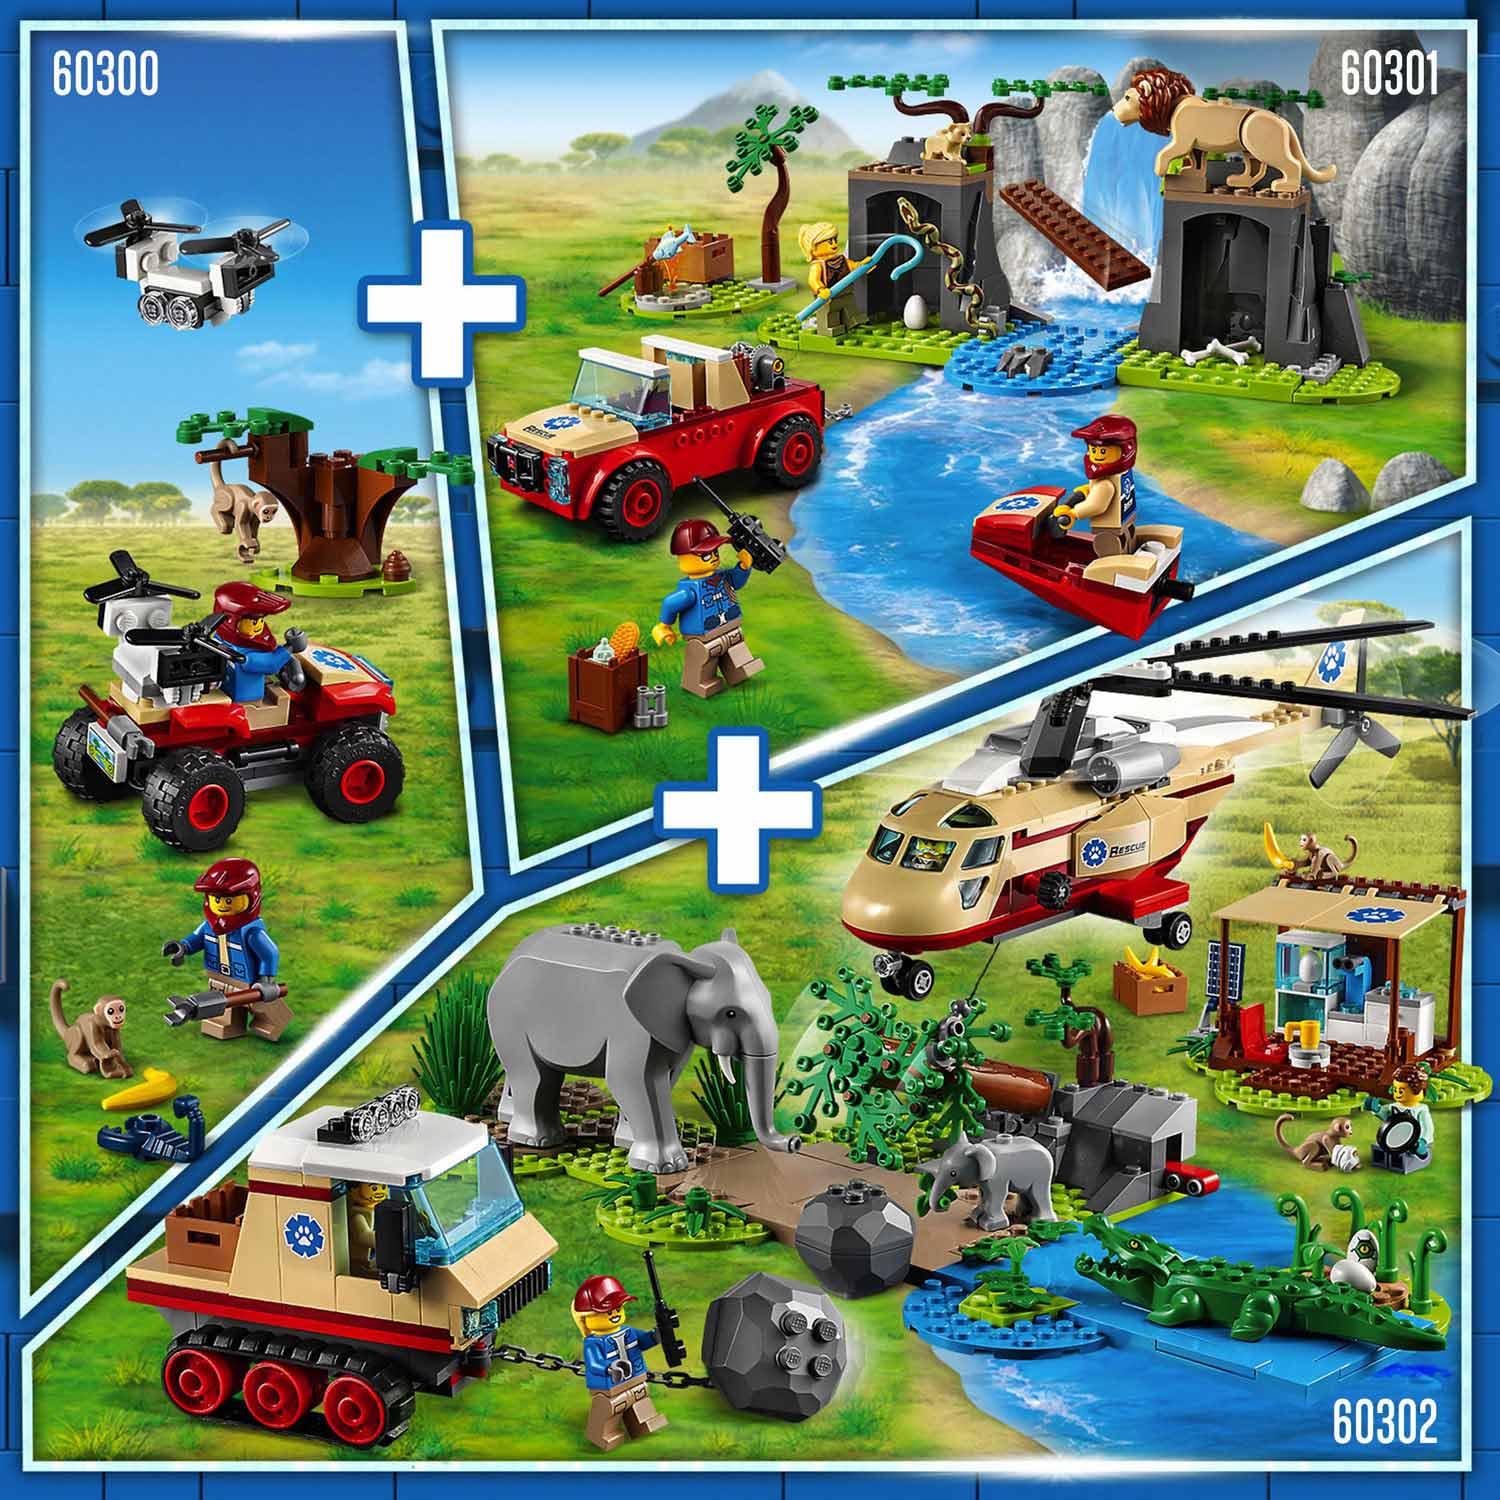 Lego City 60300 Wildlife Rescue ATV